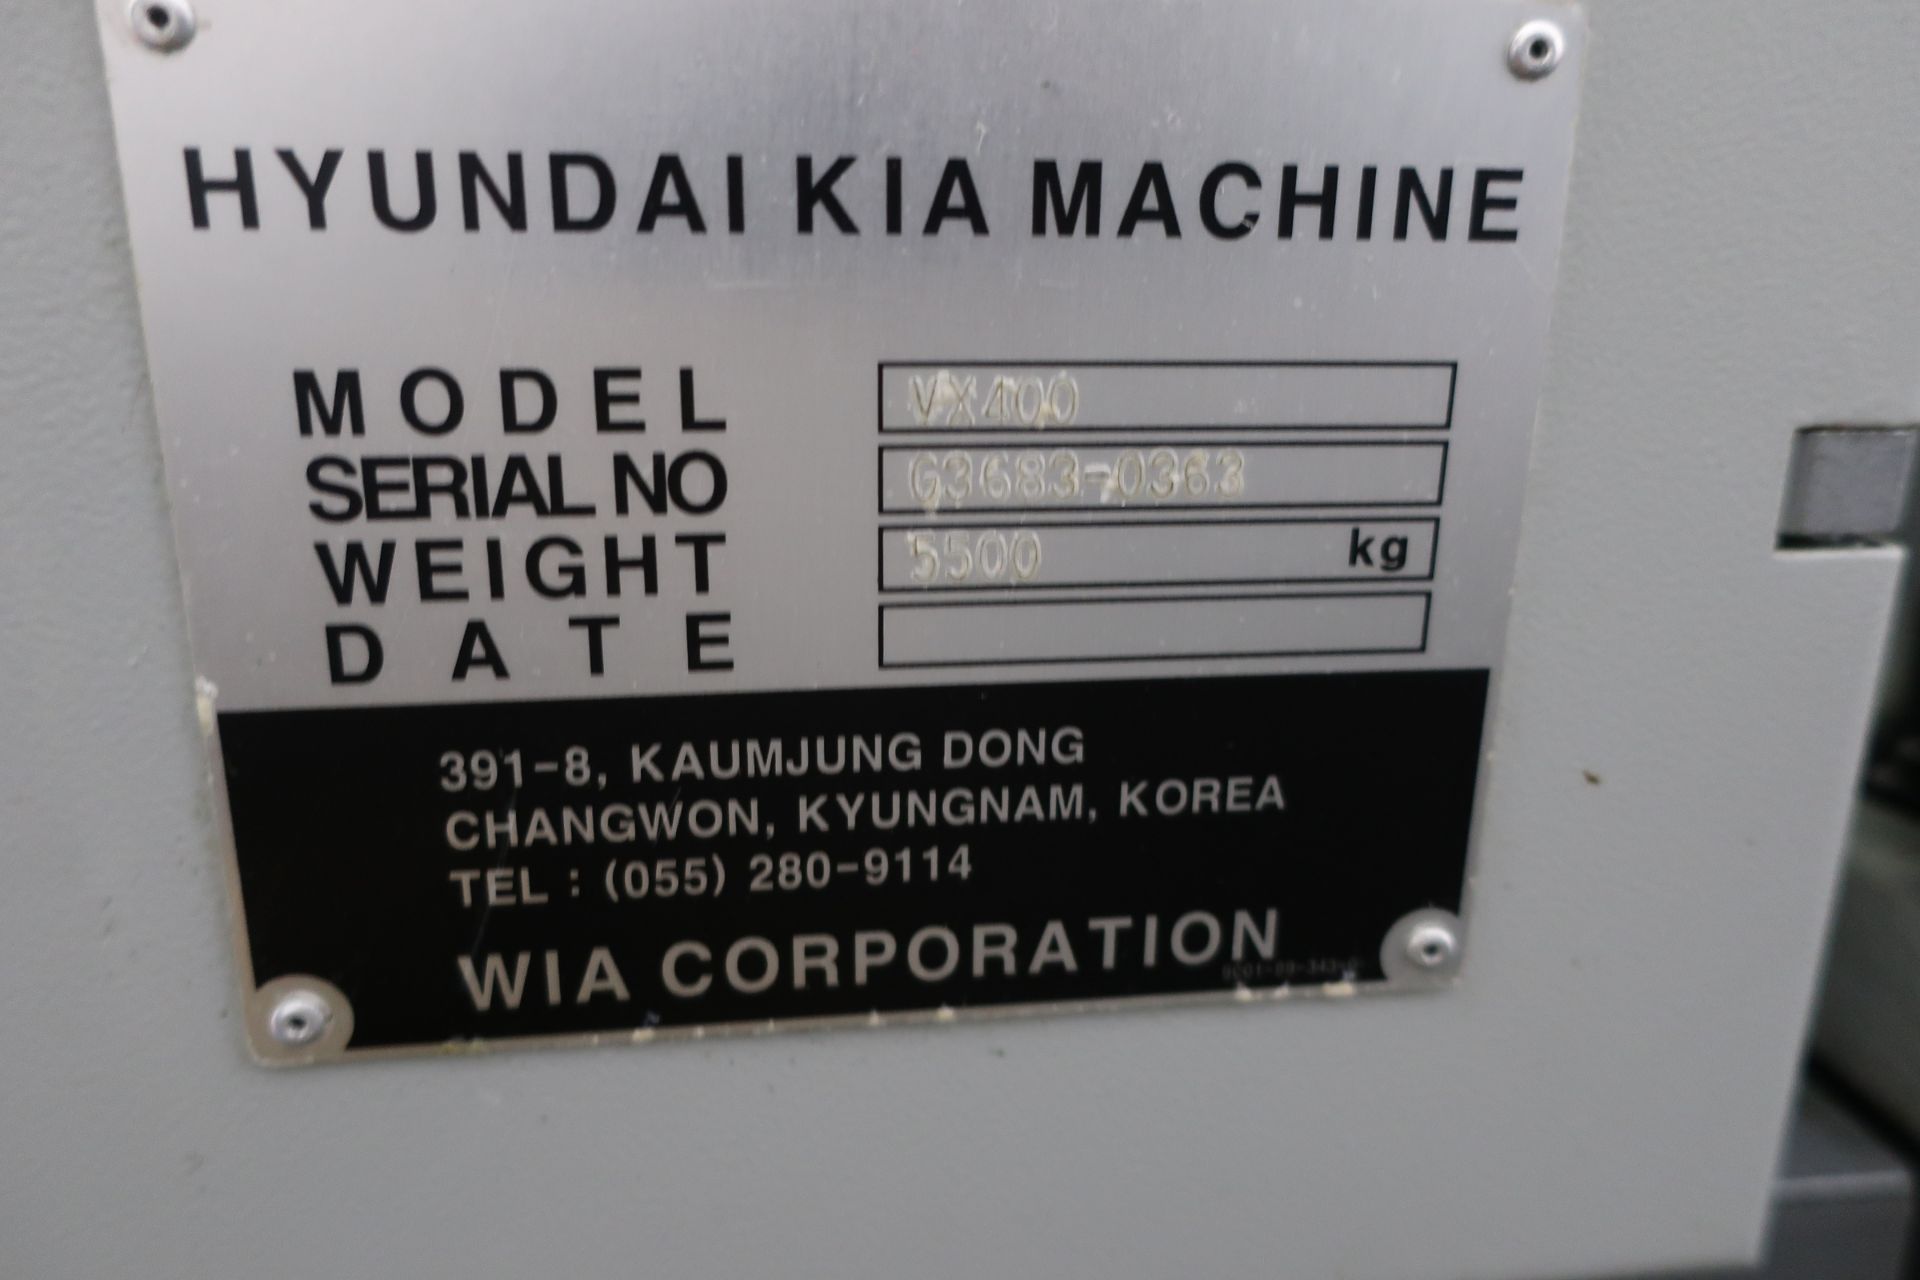 2007 Hyundai Kia VX-400 CNC Vertical Machining Center SN G3683-0363 - Image 11 of 12